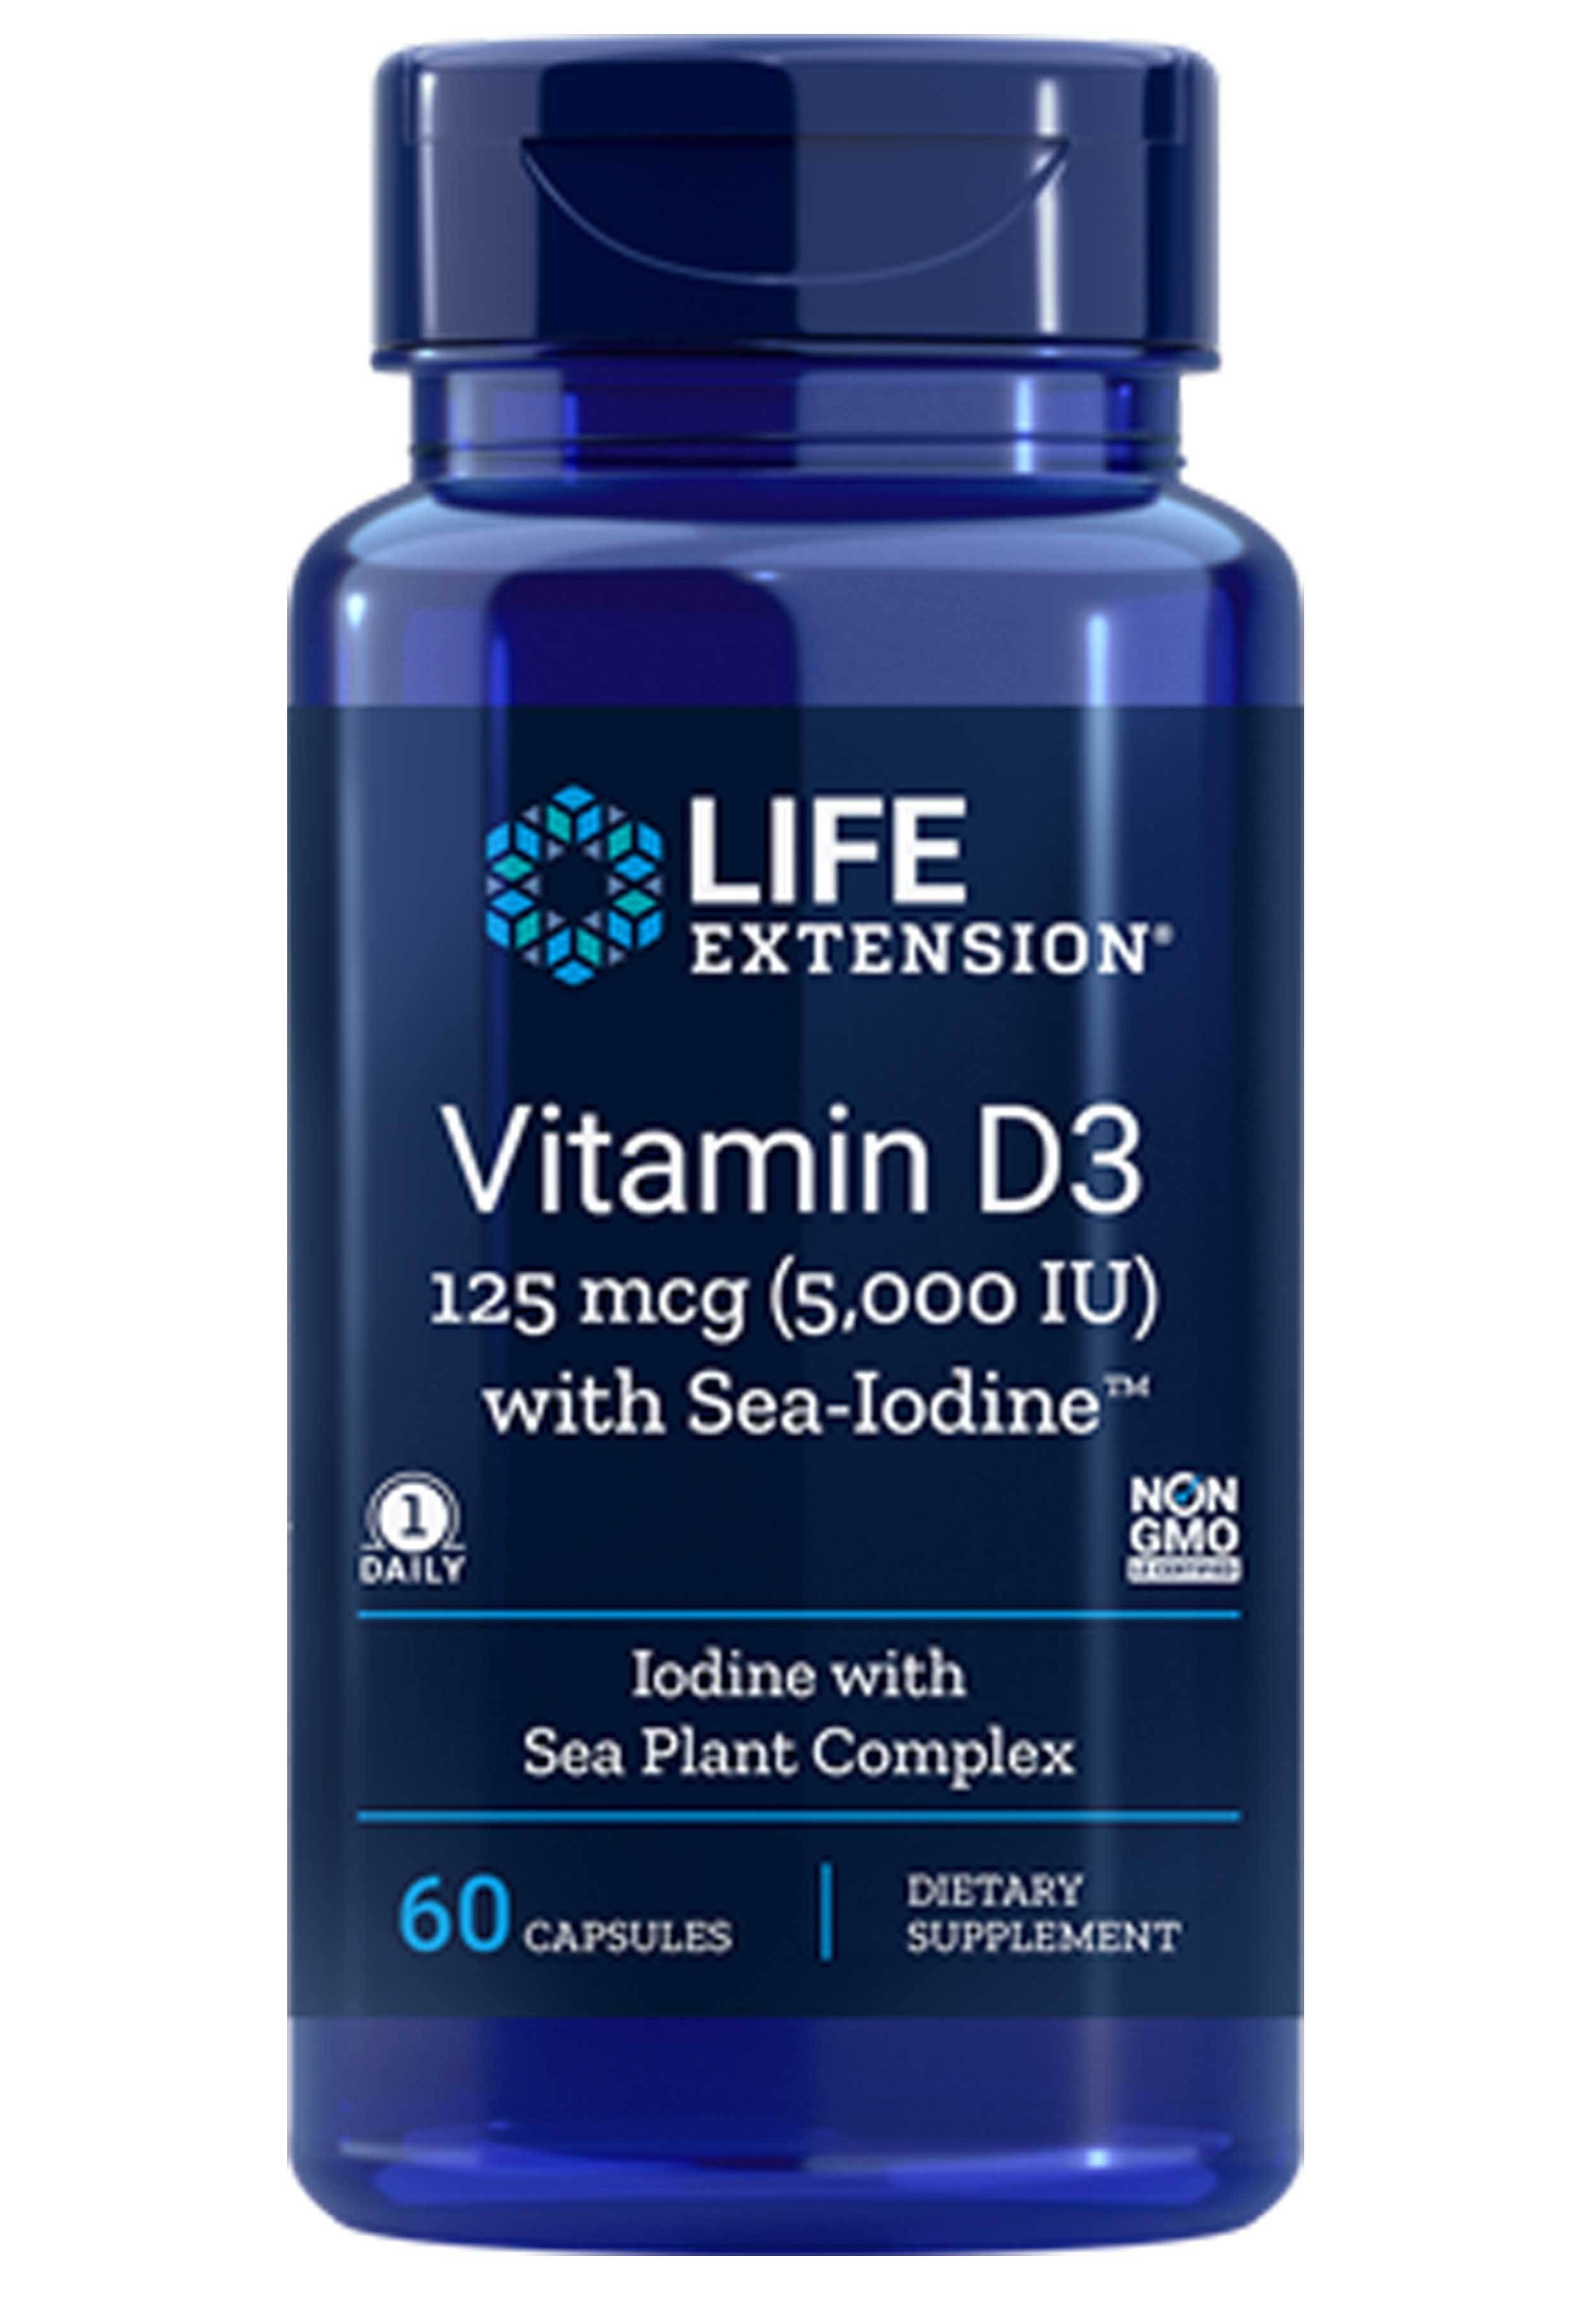 Life Extension Vitamin D3 with Sea-Iodine